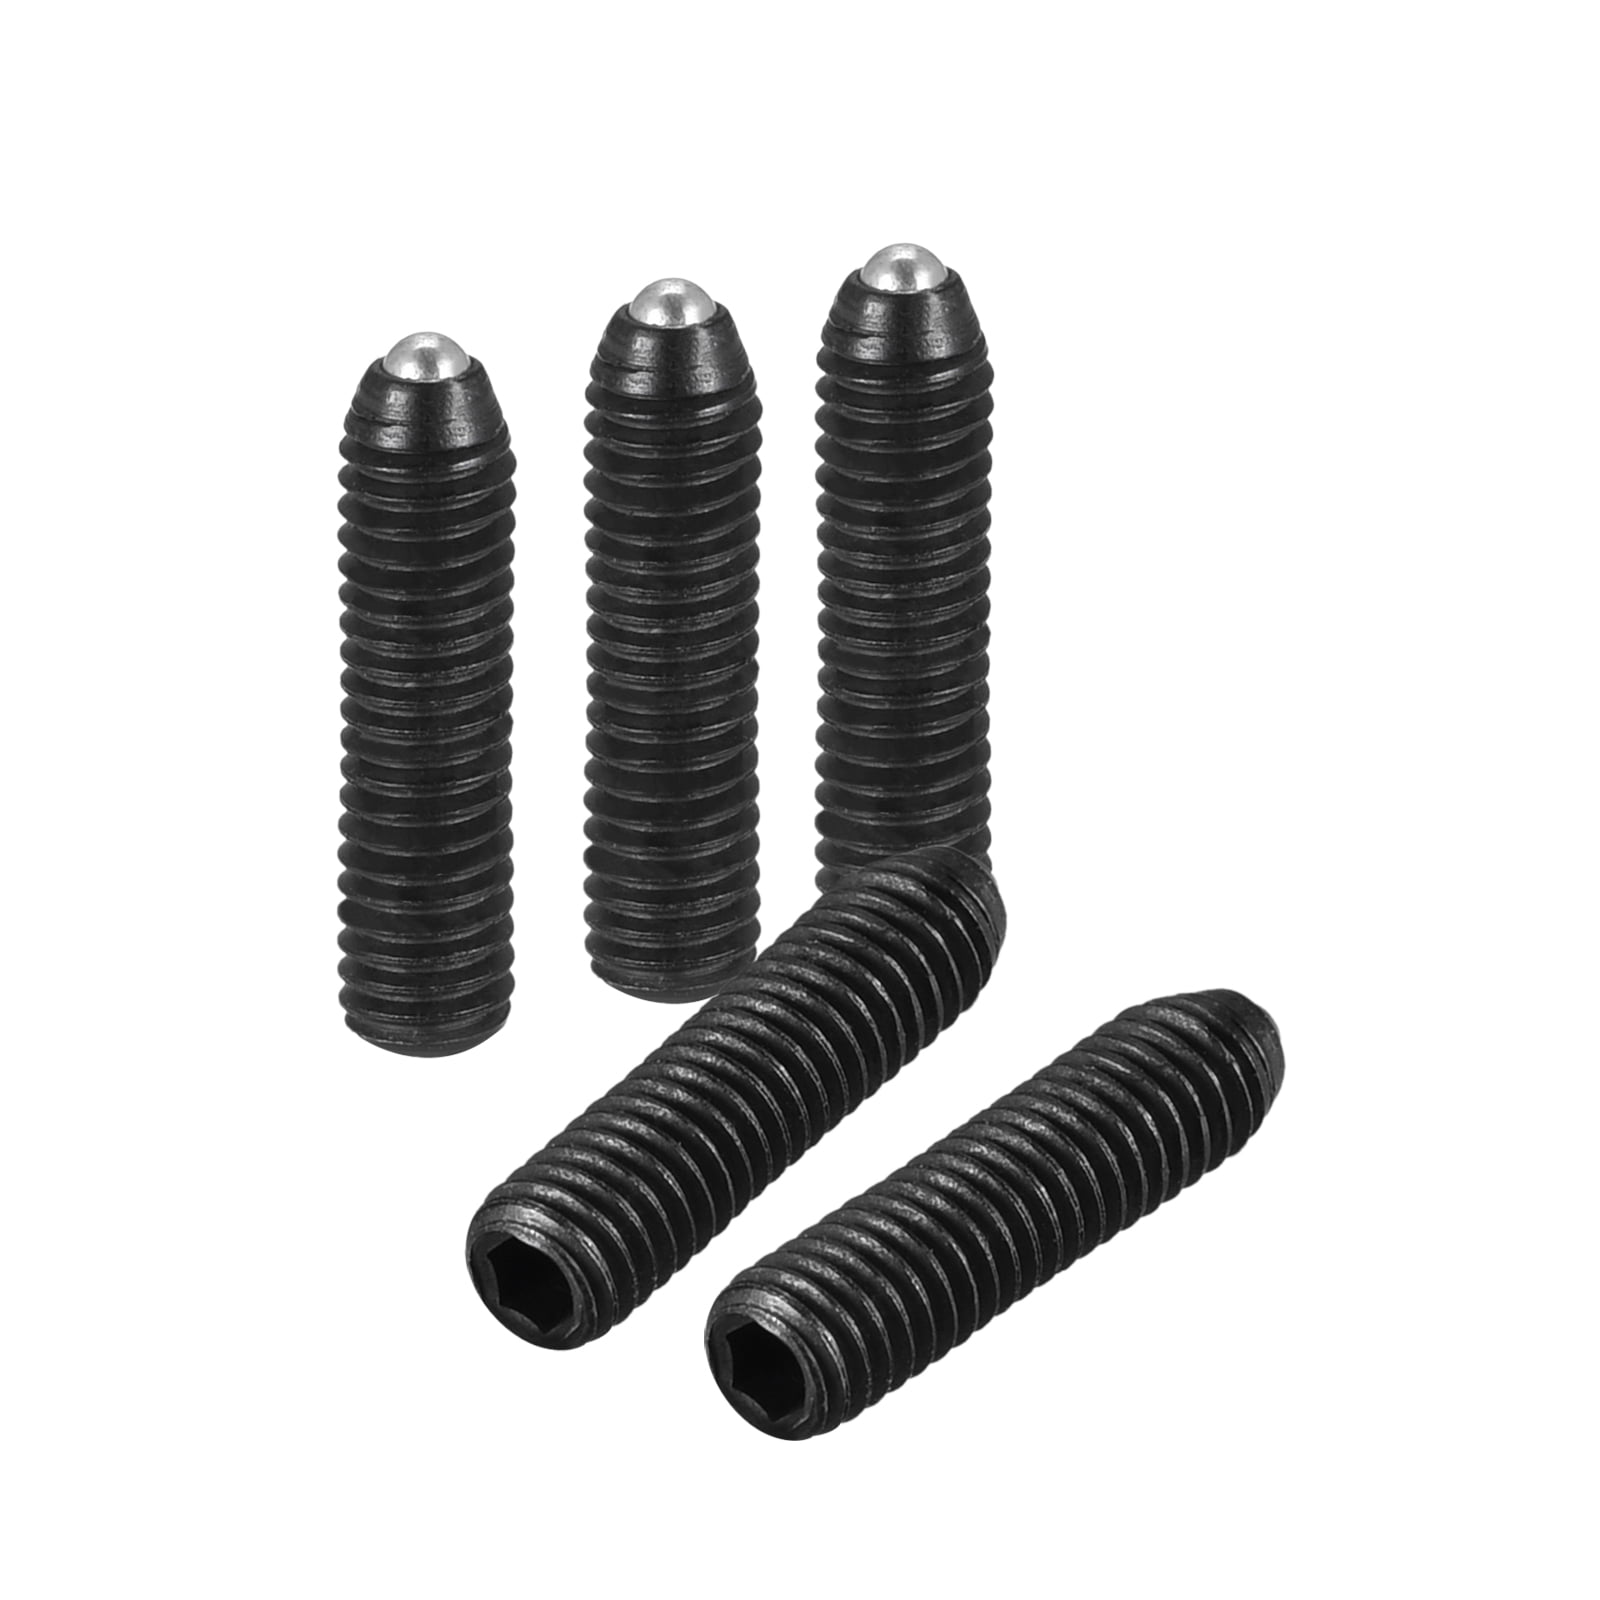 Uxcell Ball Point Set Screws, M3 x 8mm High Carbon Steel Metric Spring Hex  Socket Grub Screw Pack